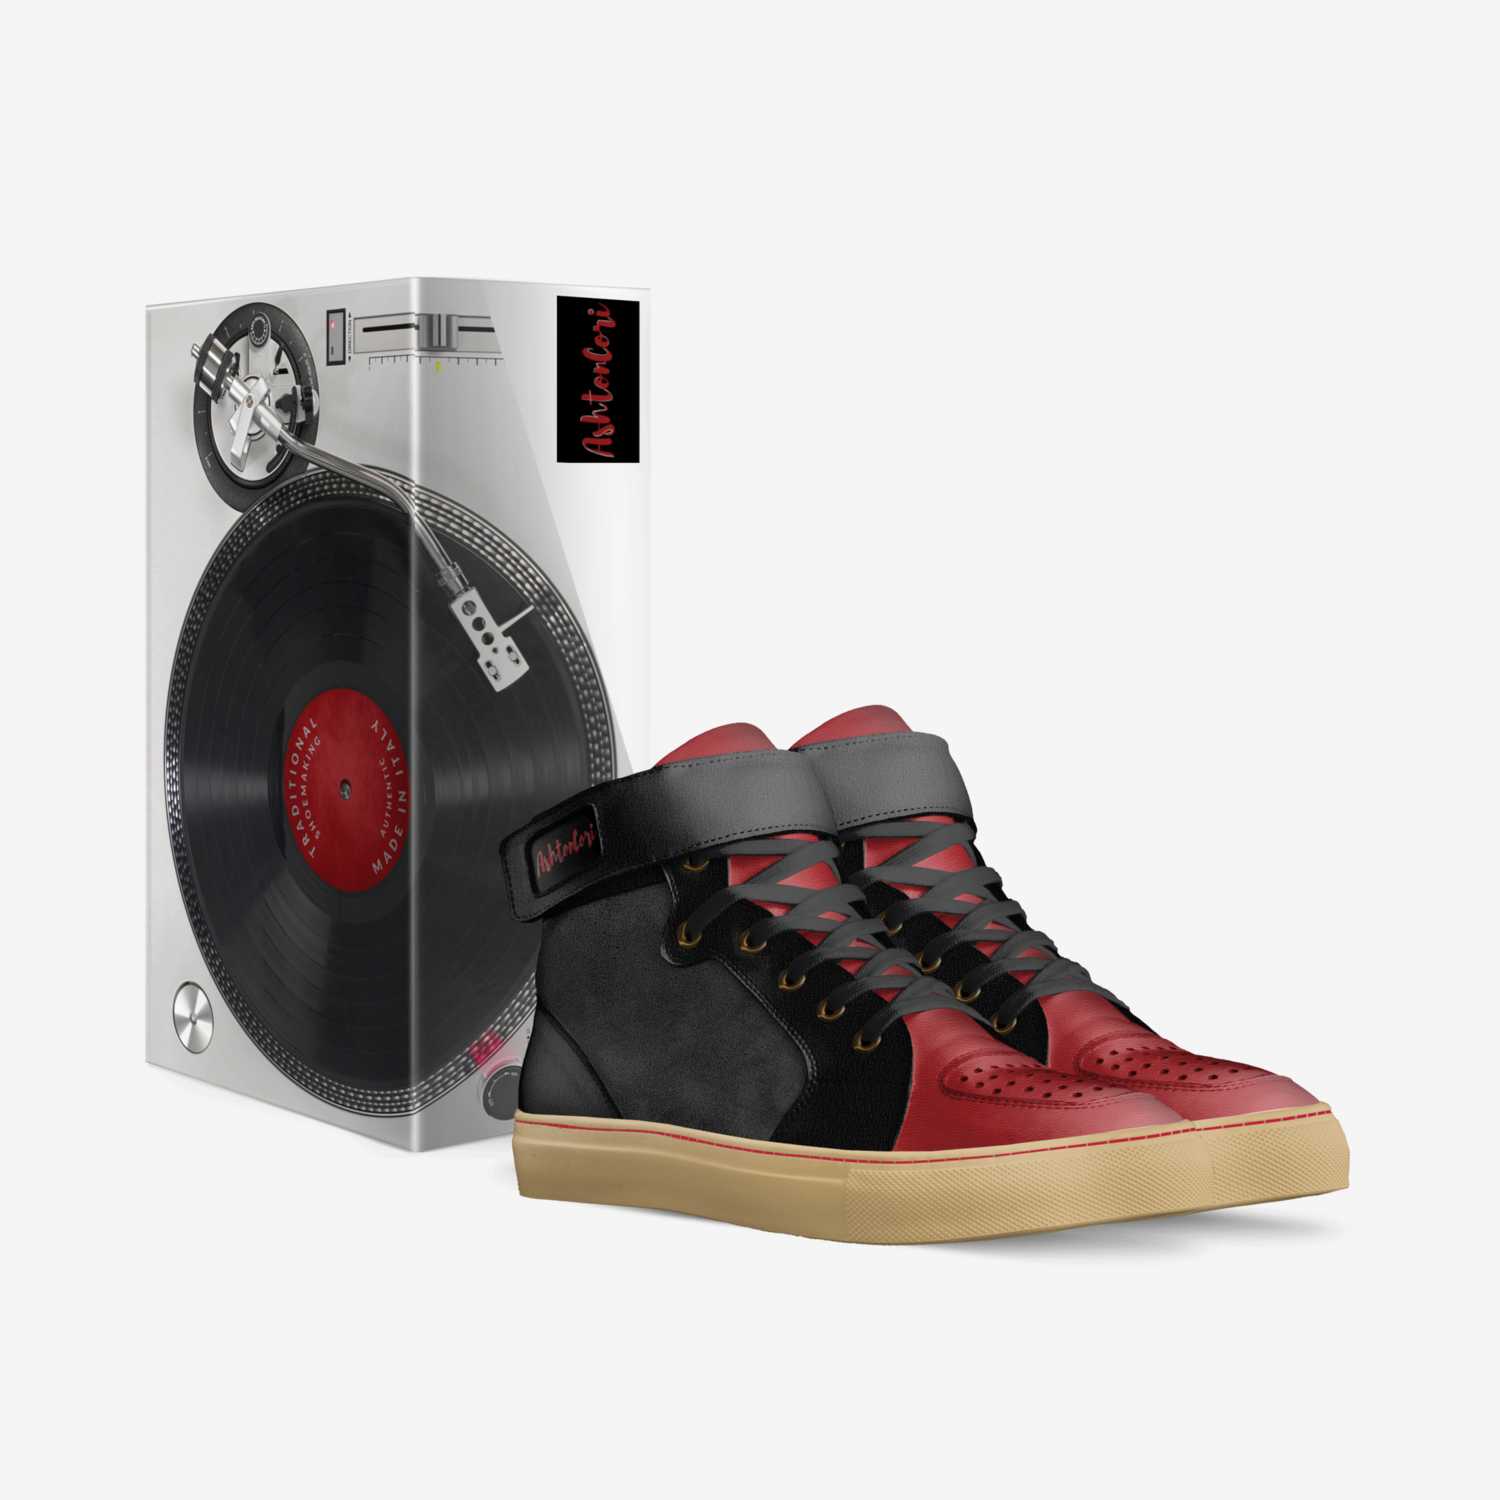 Ashton Cori custom made in Italy shoes by Corey Johnson | Box view